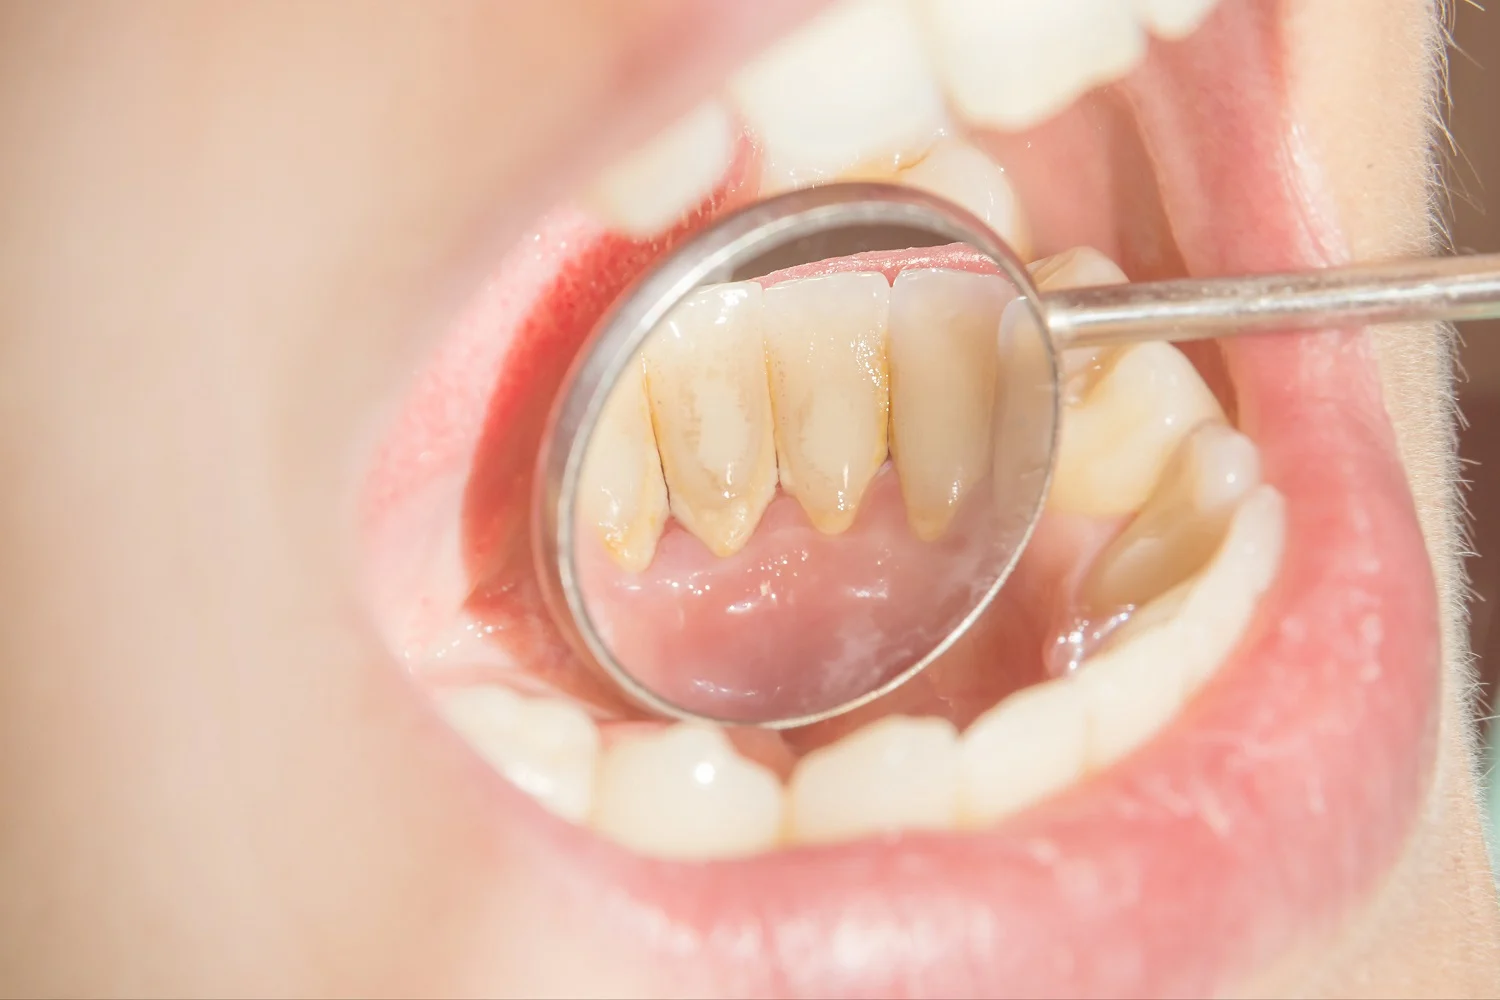 Tartar on Teeth (Dental Calculus)